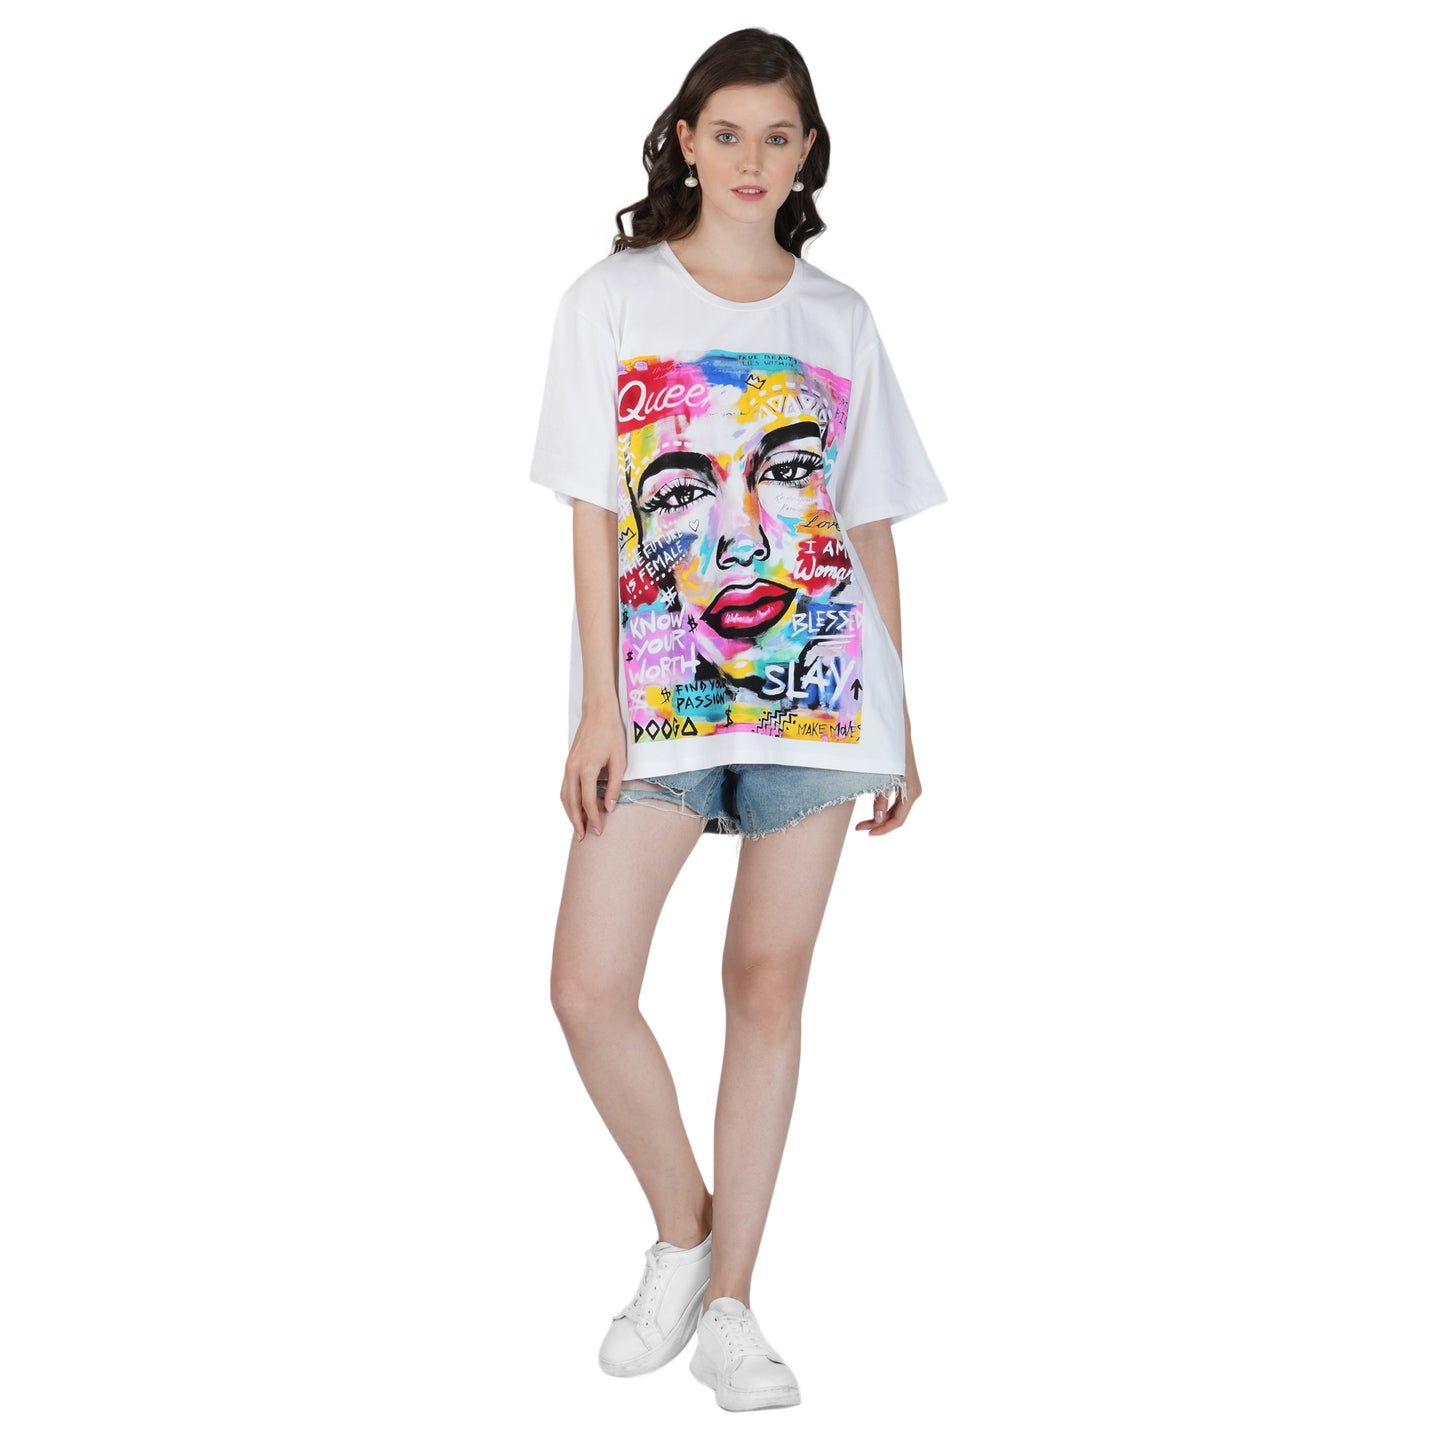 SLAY. Women's Graffiti Print Oversized Drop shoulder T-shirt